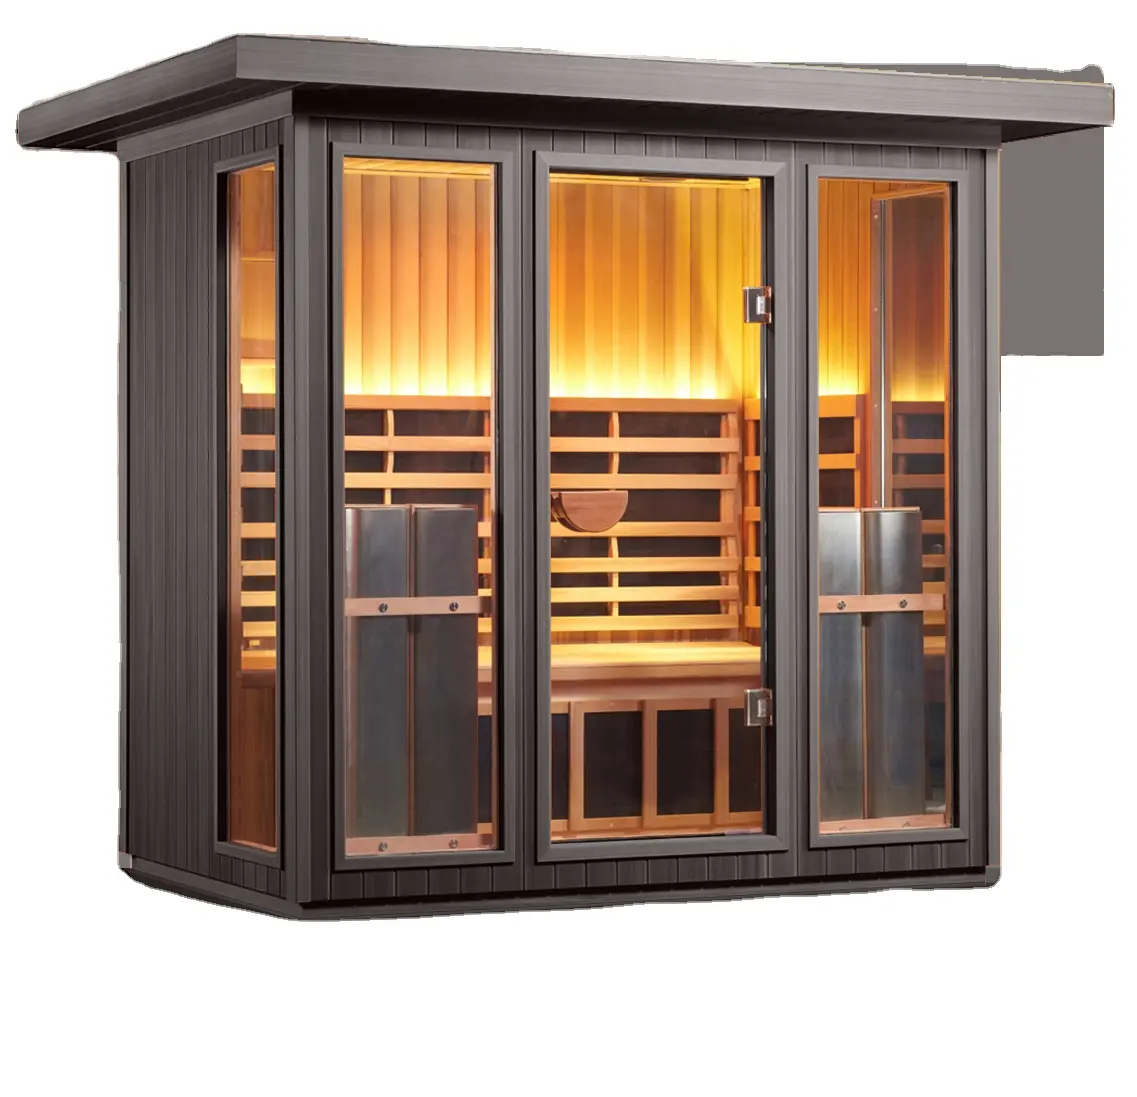 Black Design Outdoor All Spectrum 5 Person Infrared Sauna Room for Sale